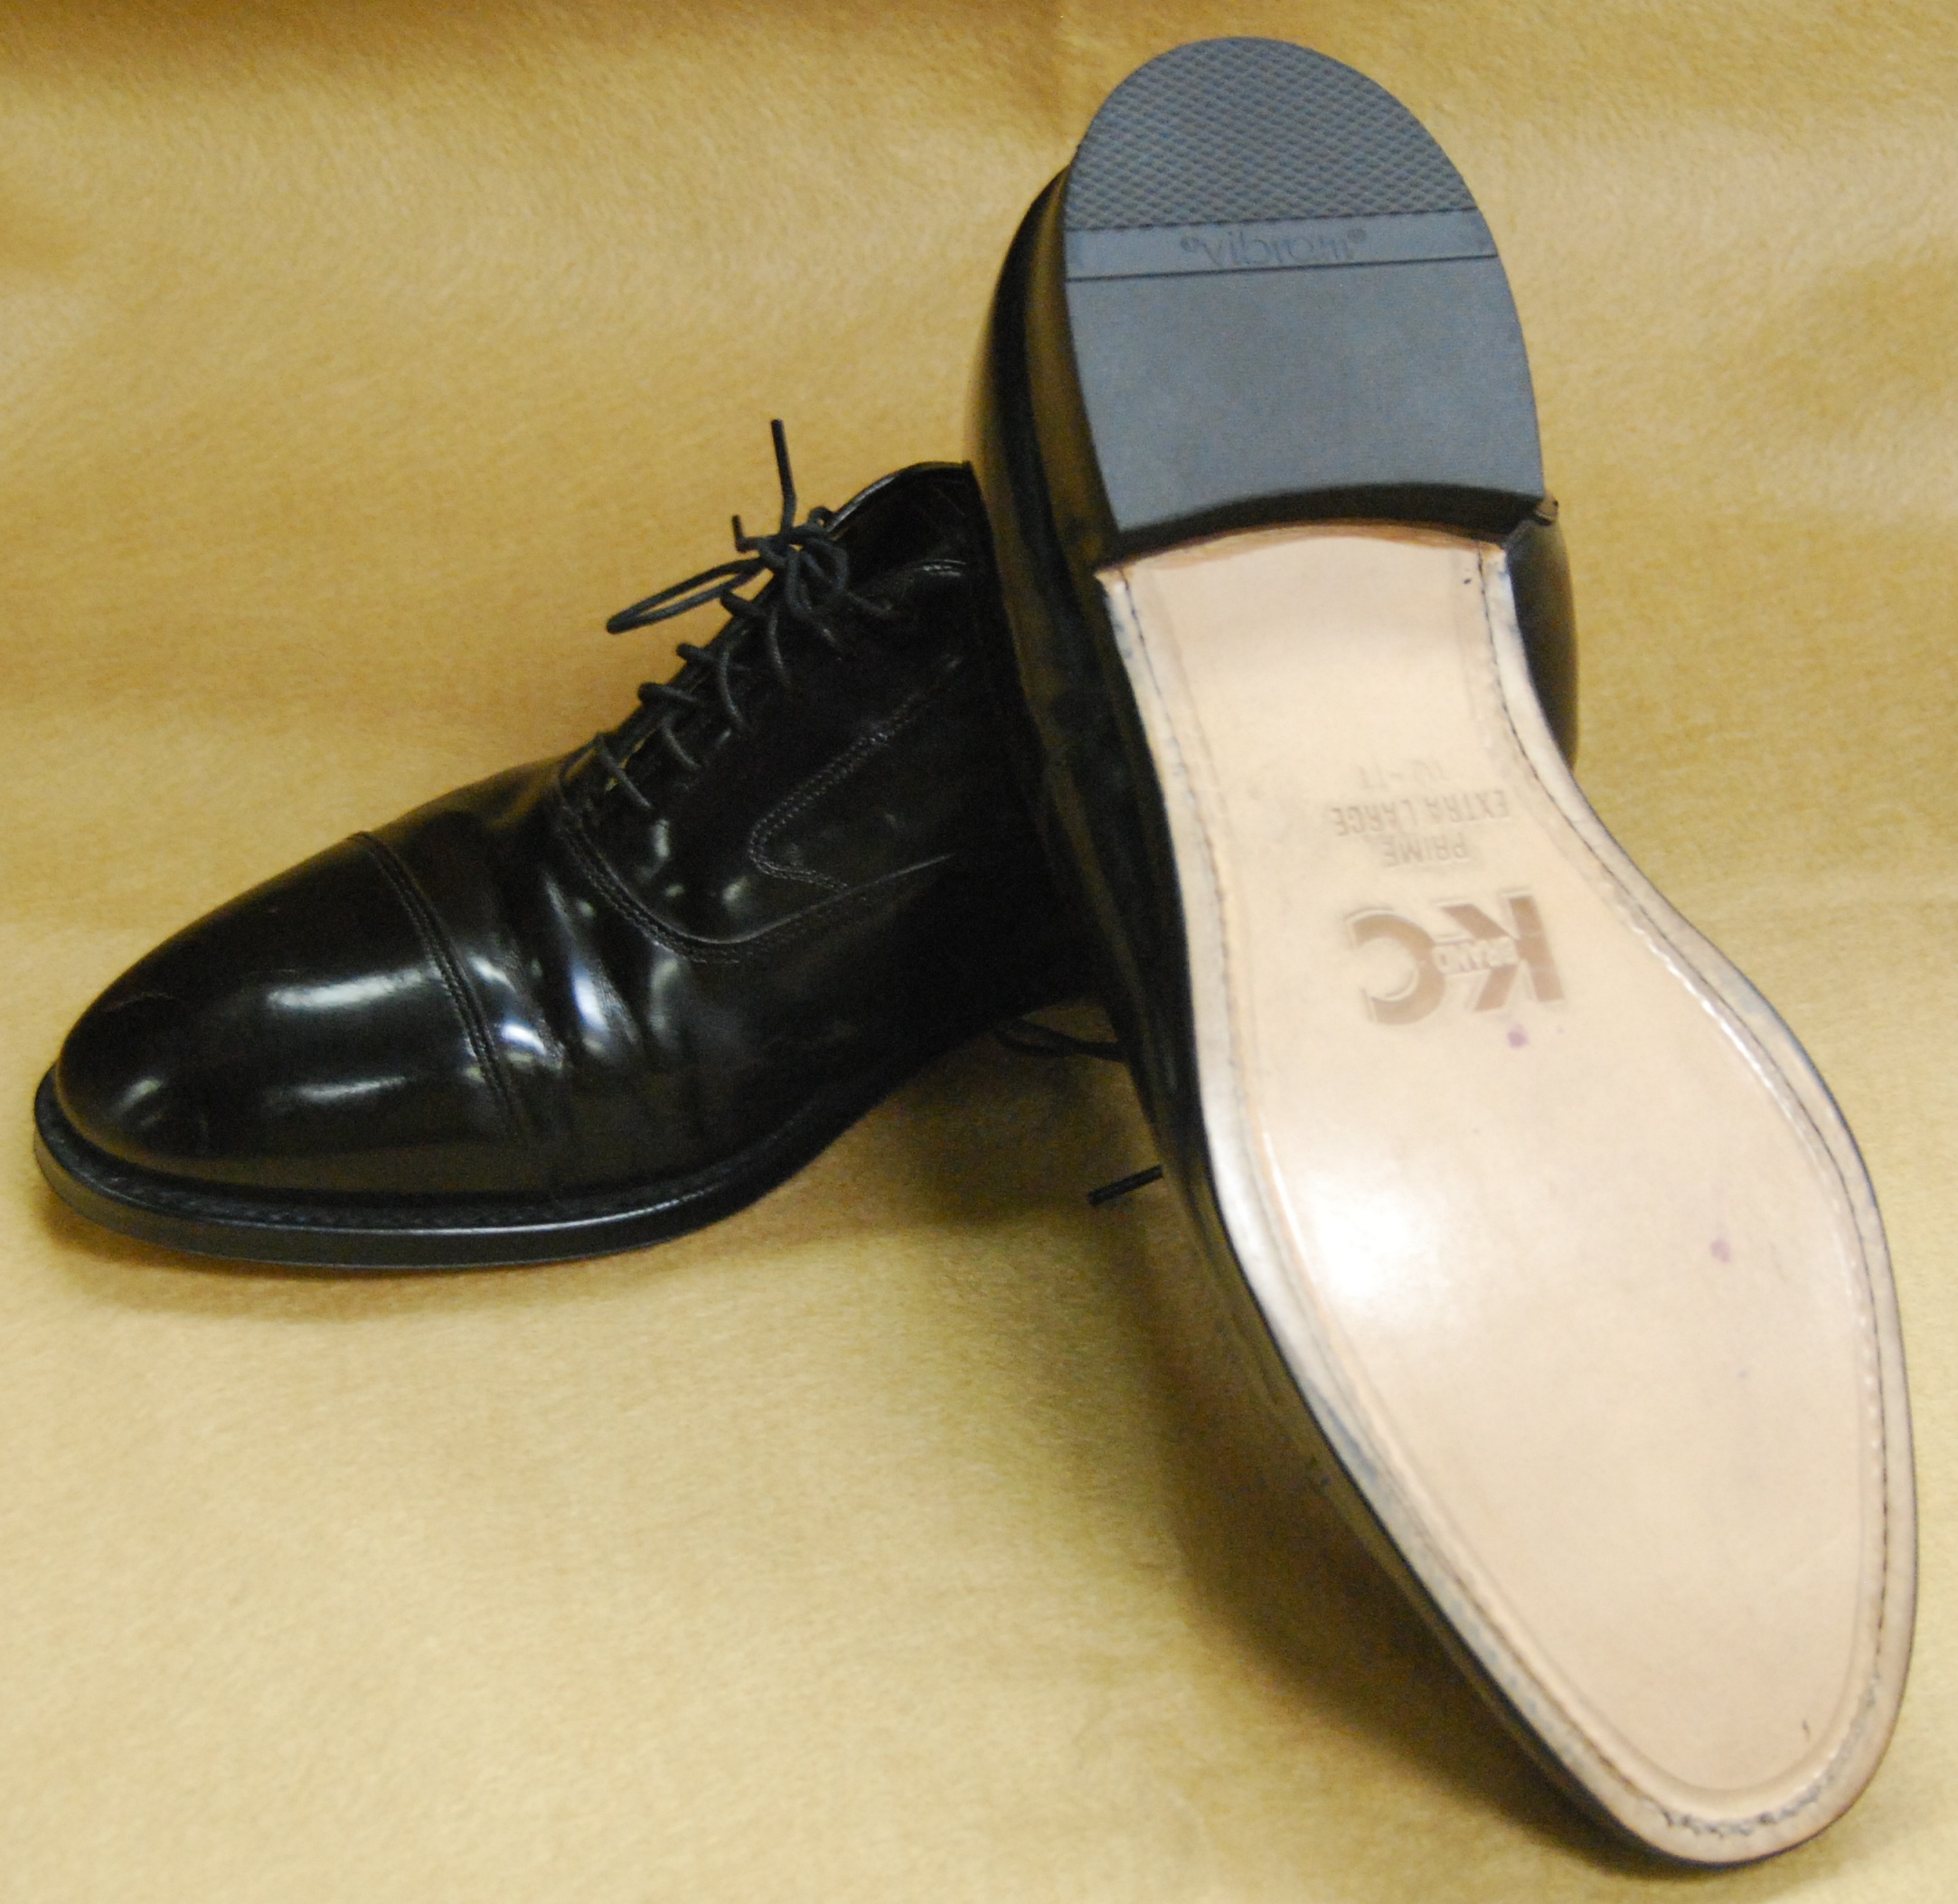 dress shoe soles